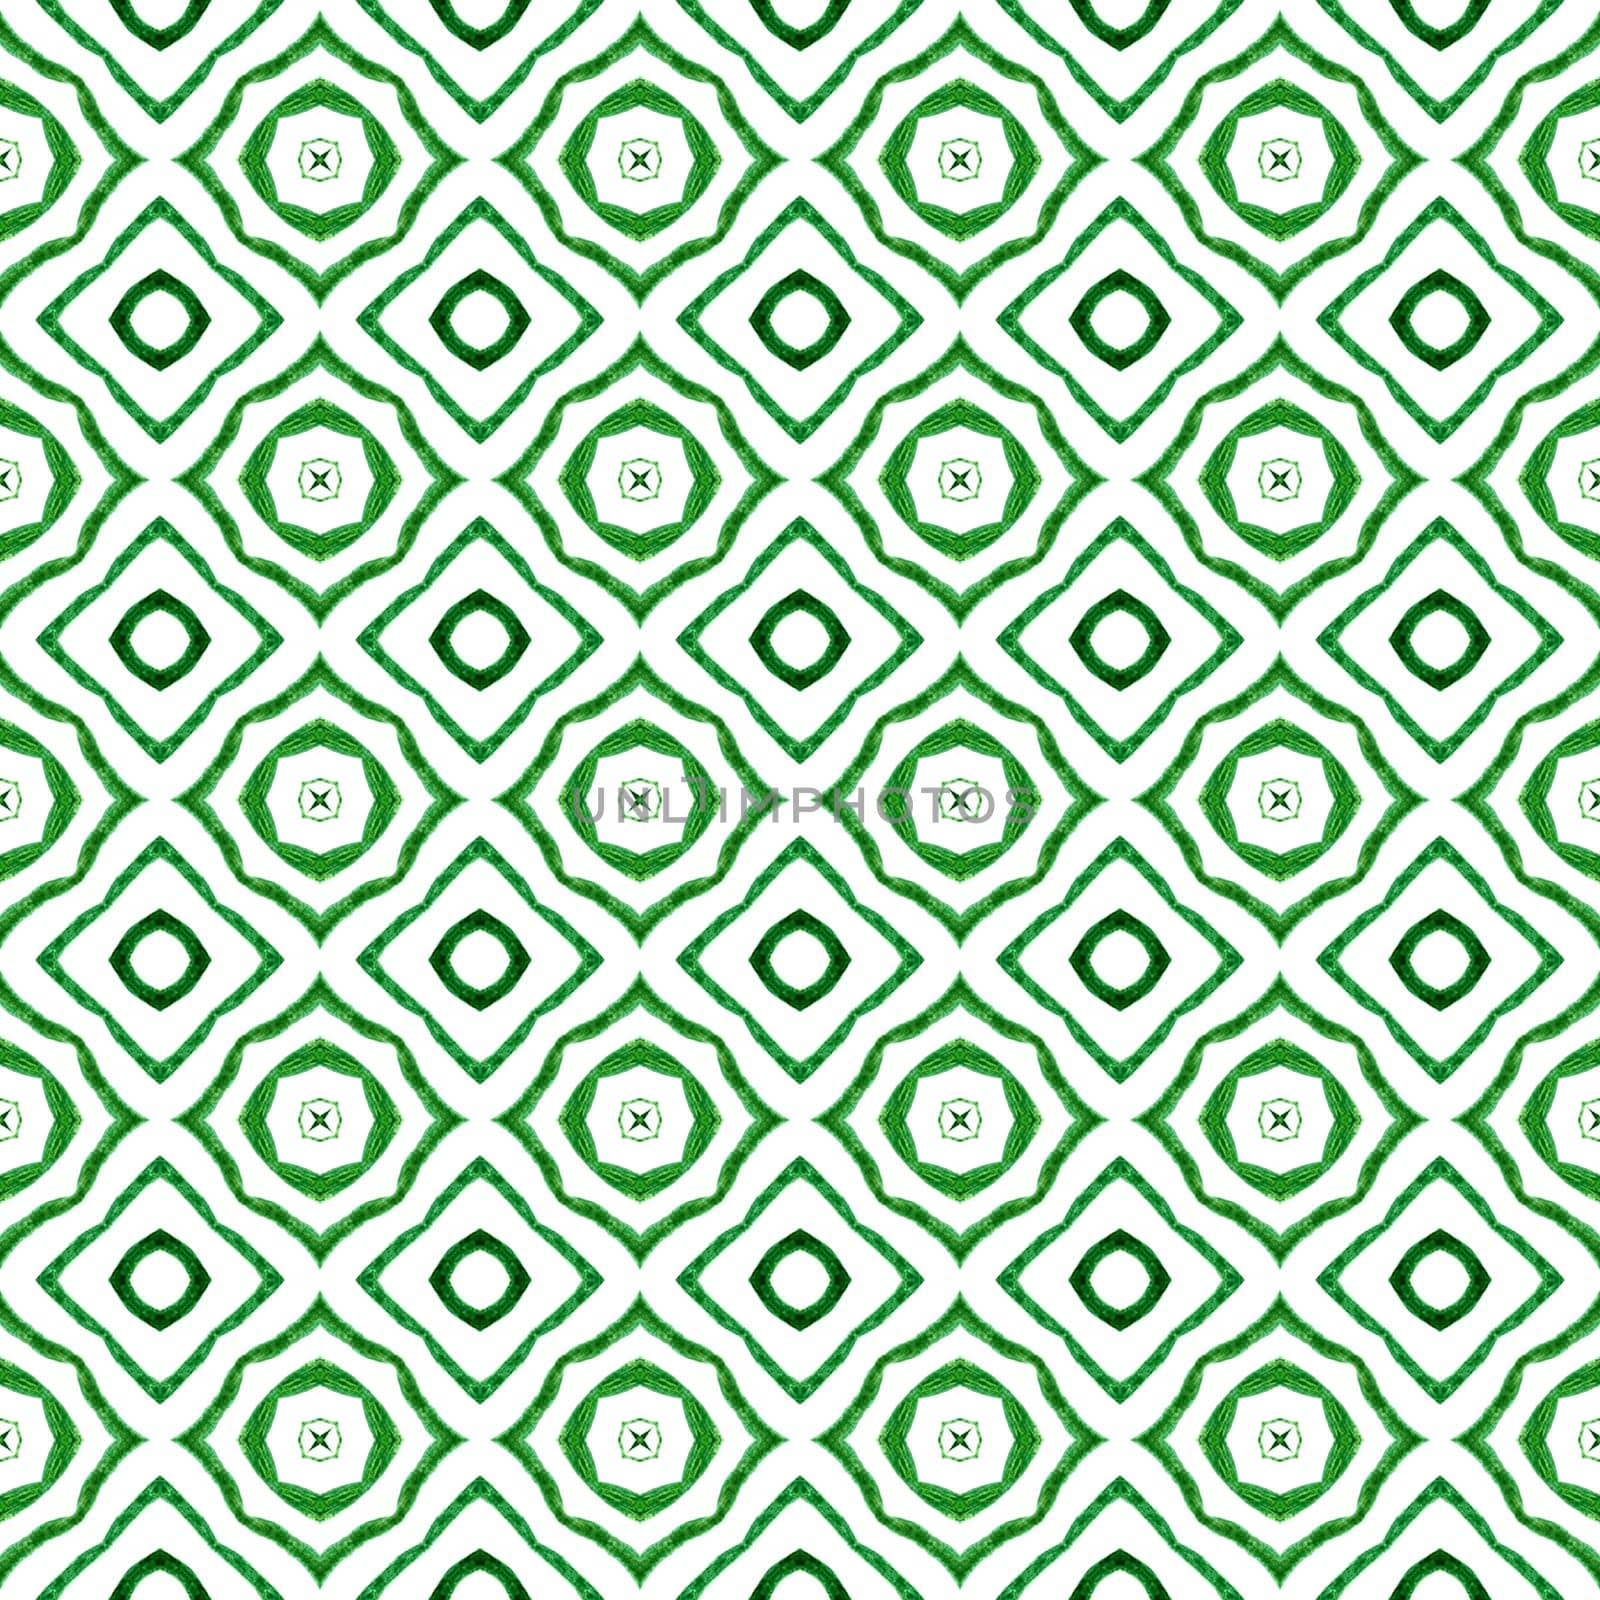 Watercolor summer ethnic border pattern. Green quaint boho chic summer design. Textile ready ravishing print, swimwear fabric, wallpaper, wrapping. Ethnic hand painted pattern.